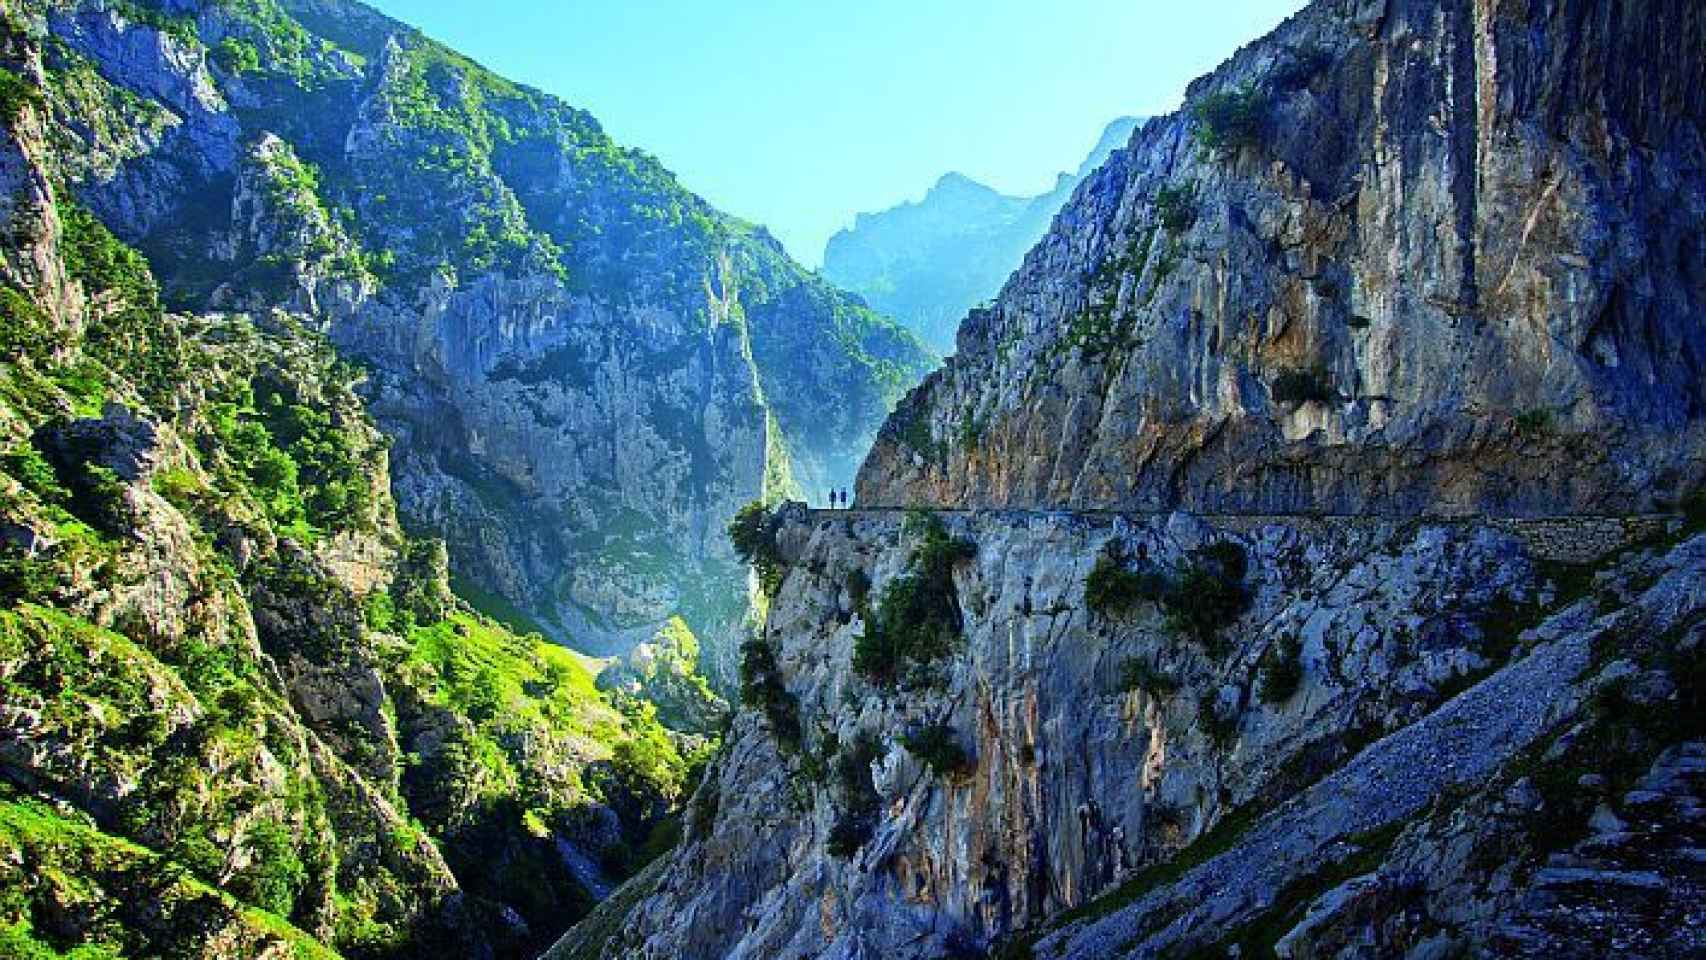 Ruta del Cares en Asturias